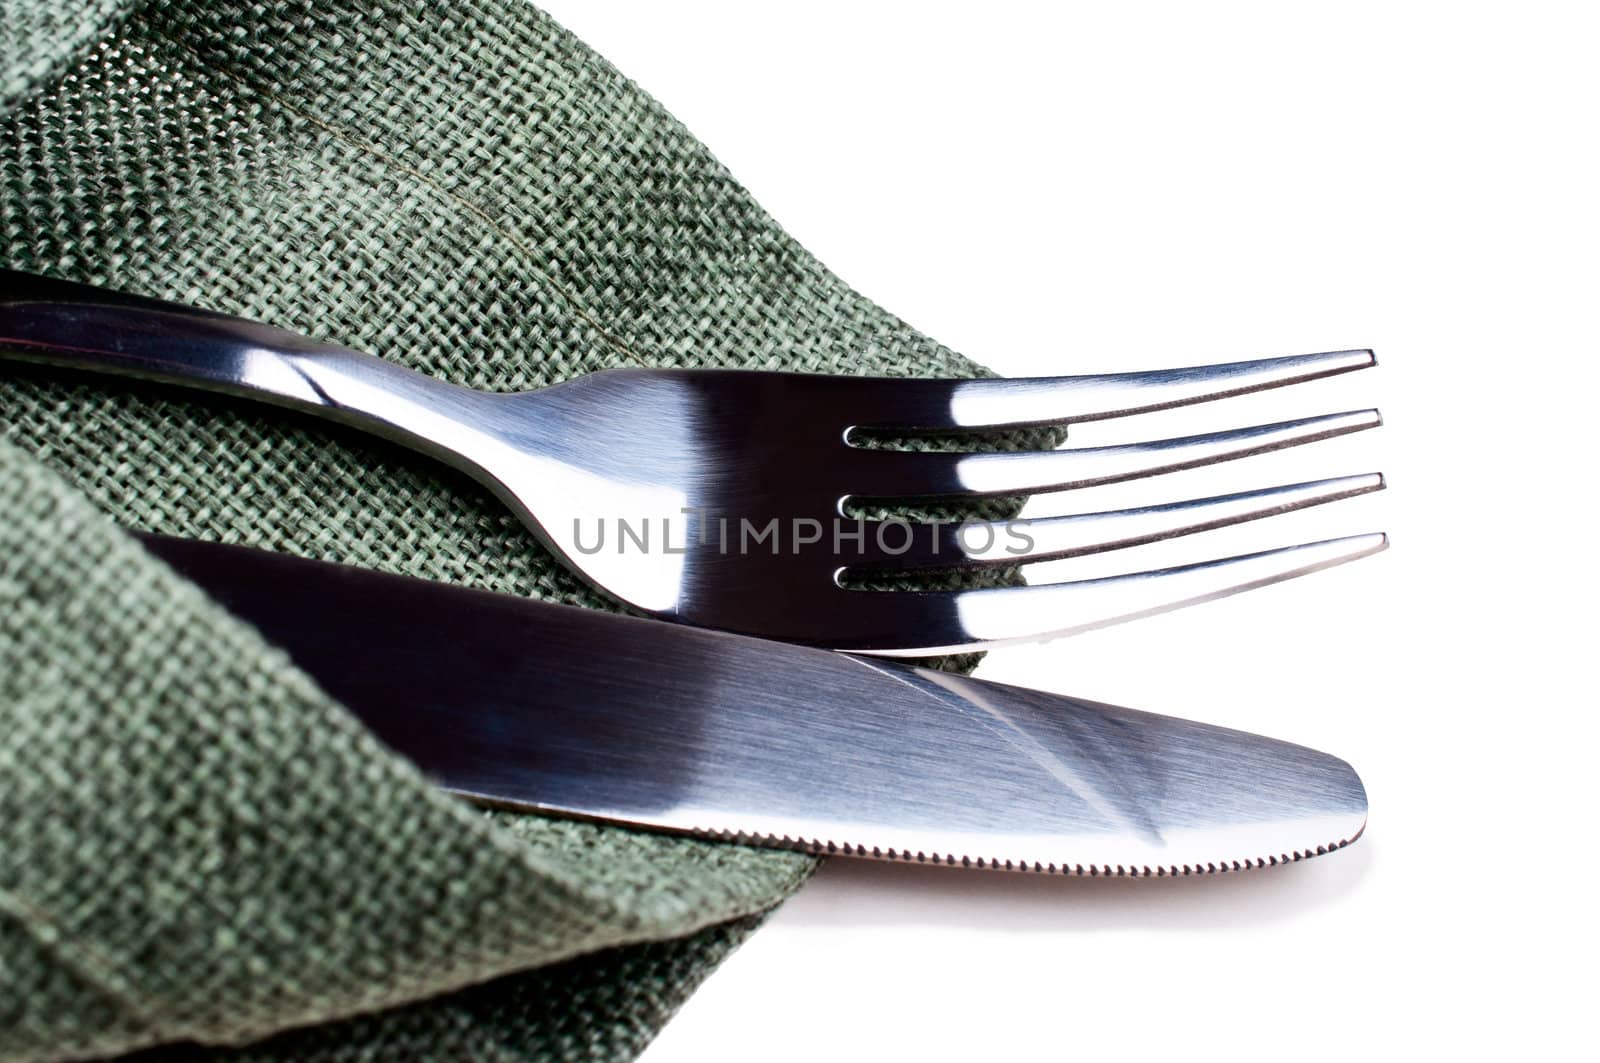 Knife and fork on green napkin  by Nanisimova